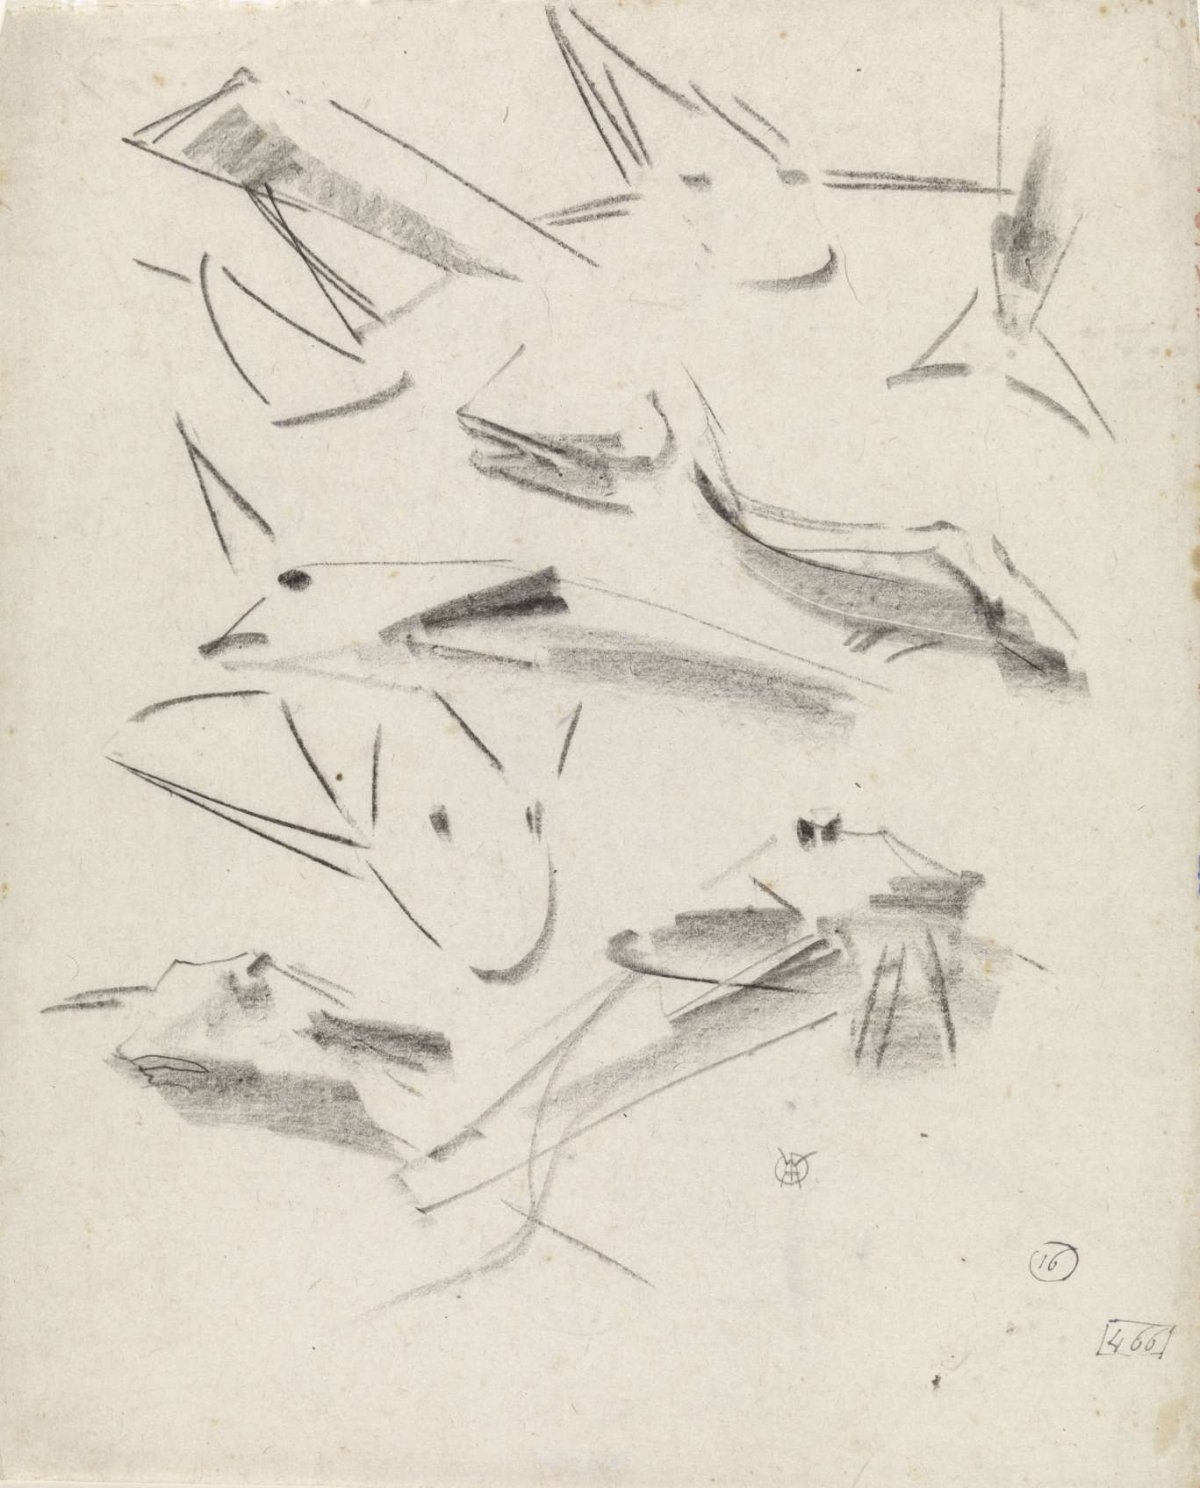 Sketches of pones and detail studies, Gerrit Willem Dijsselhof, 1876 - 1924